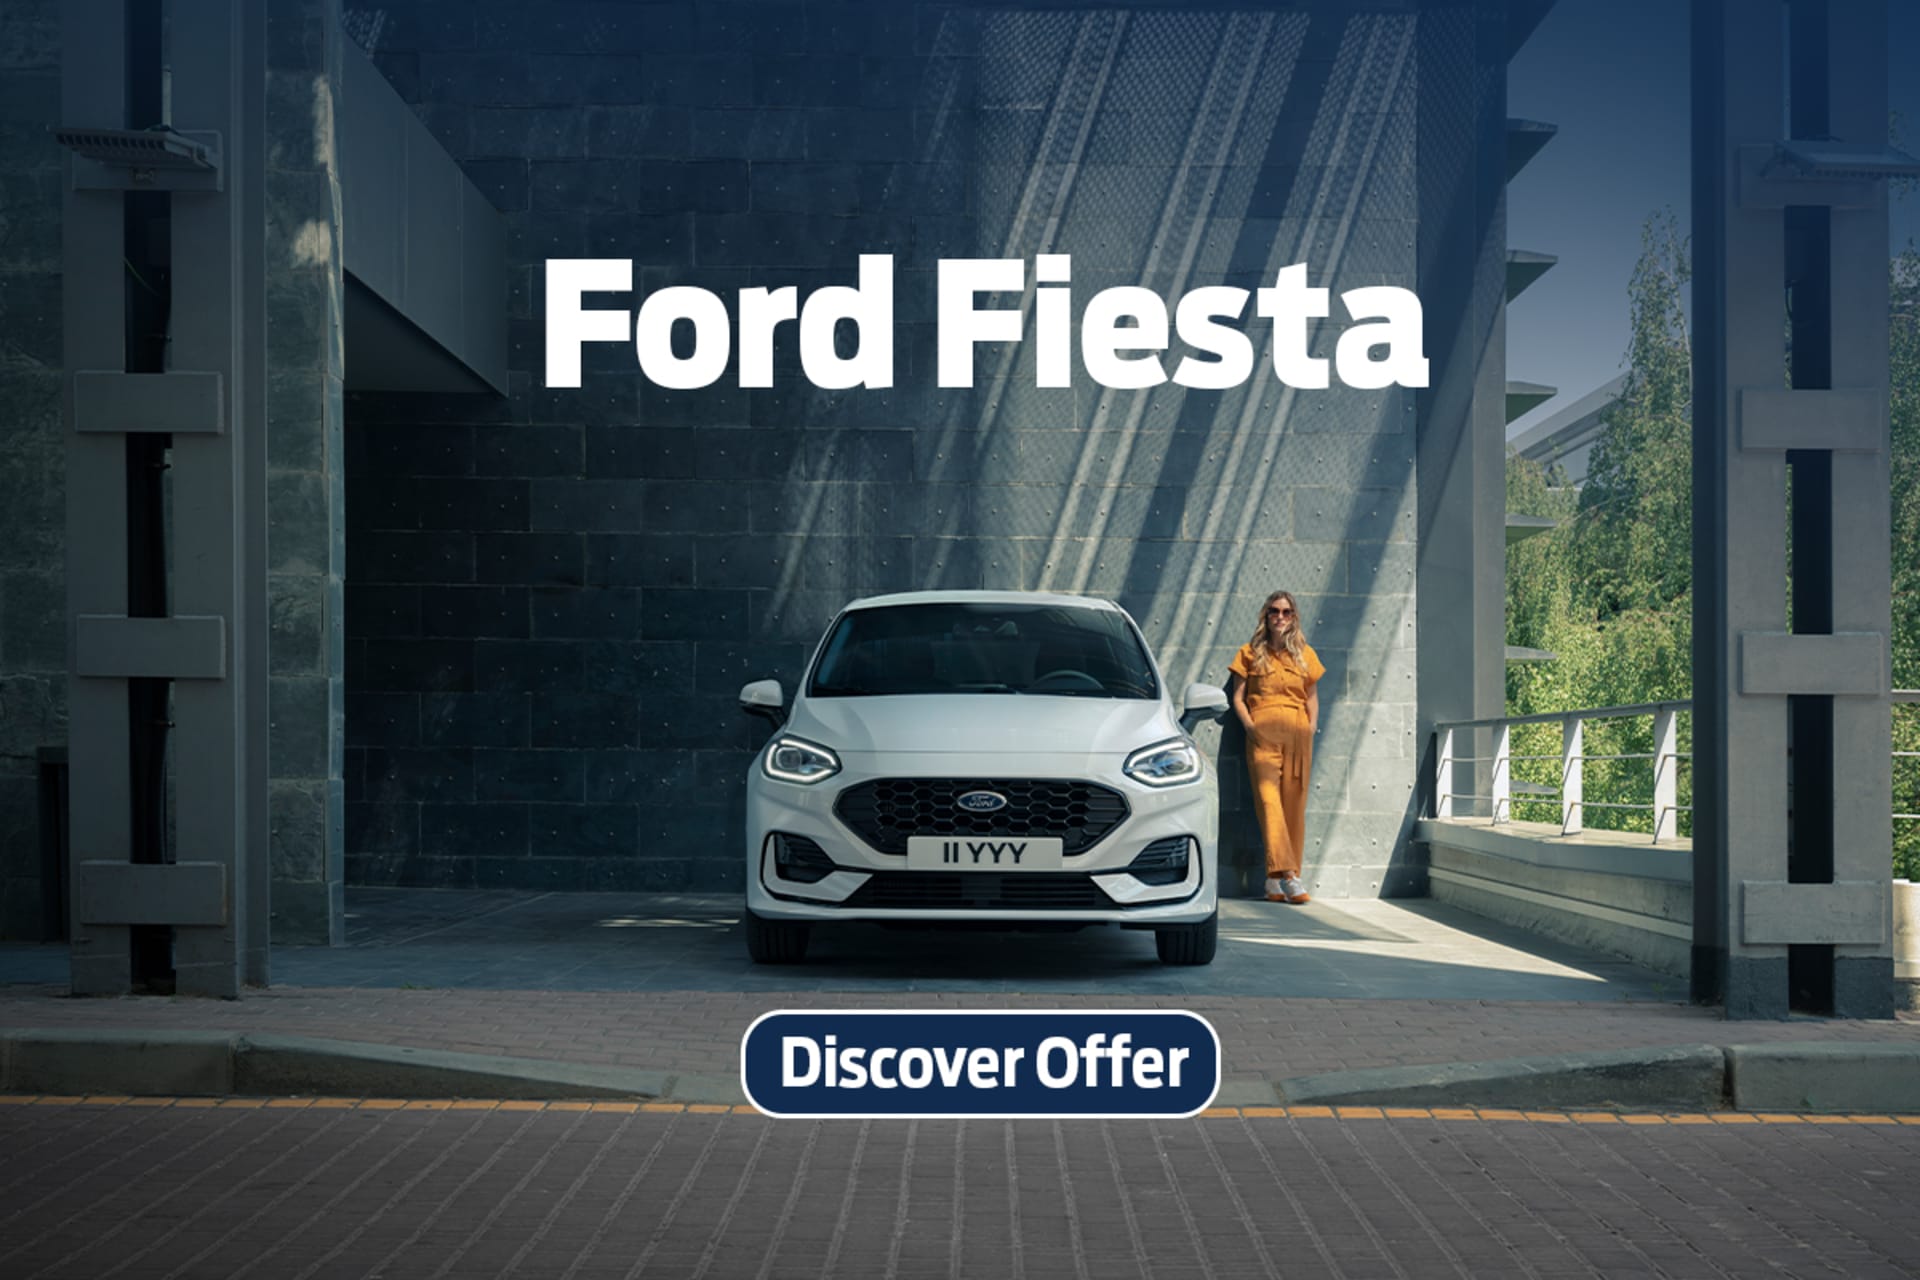 Ford Fiesta Offer